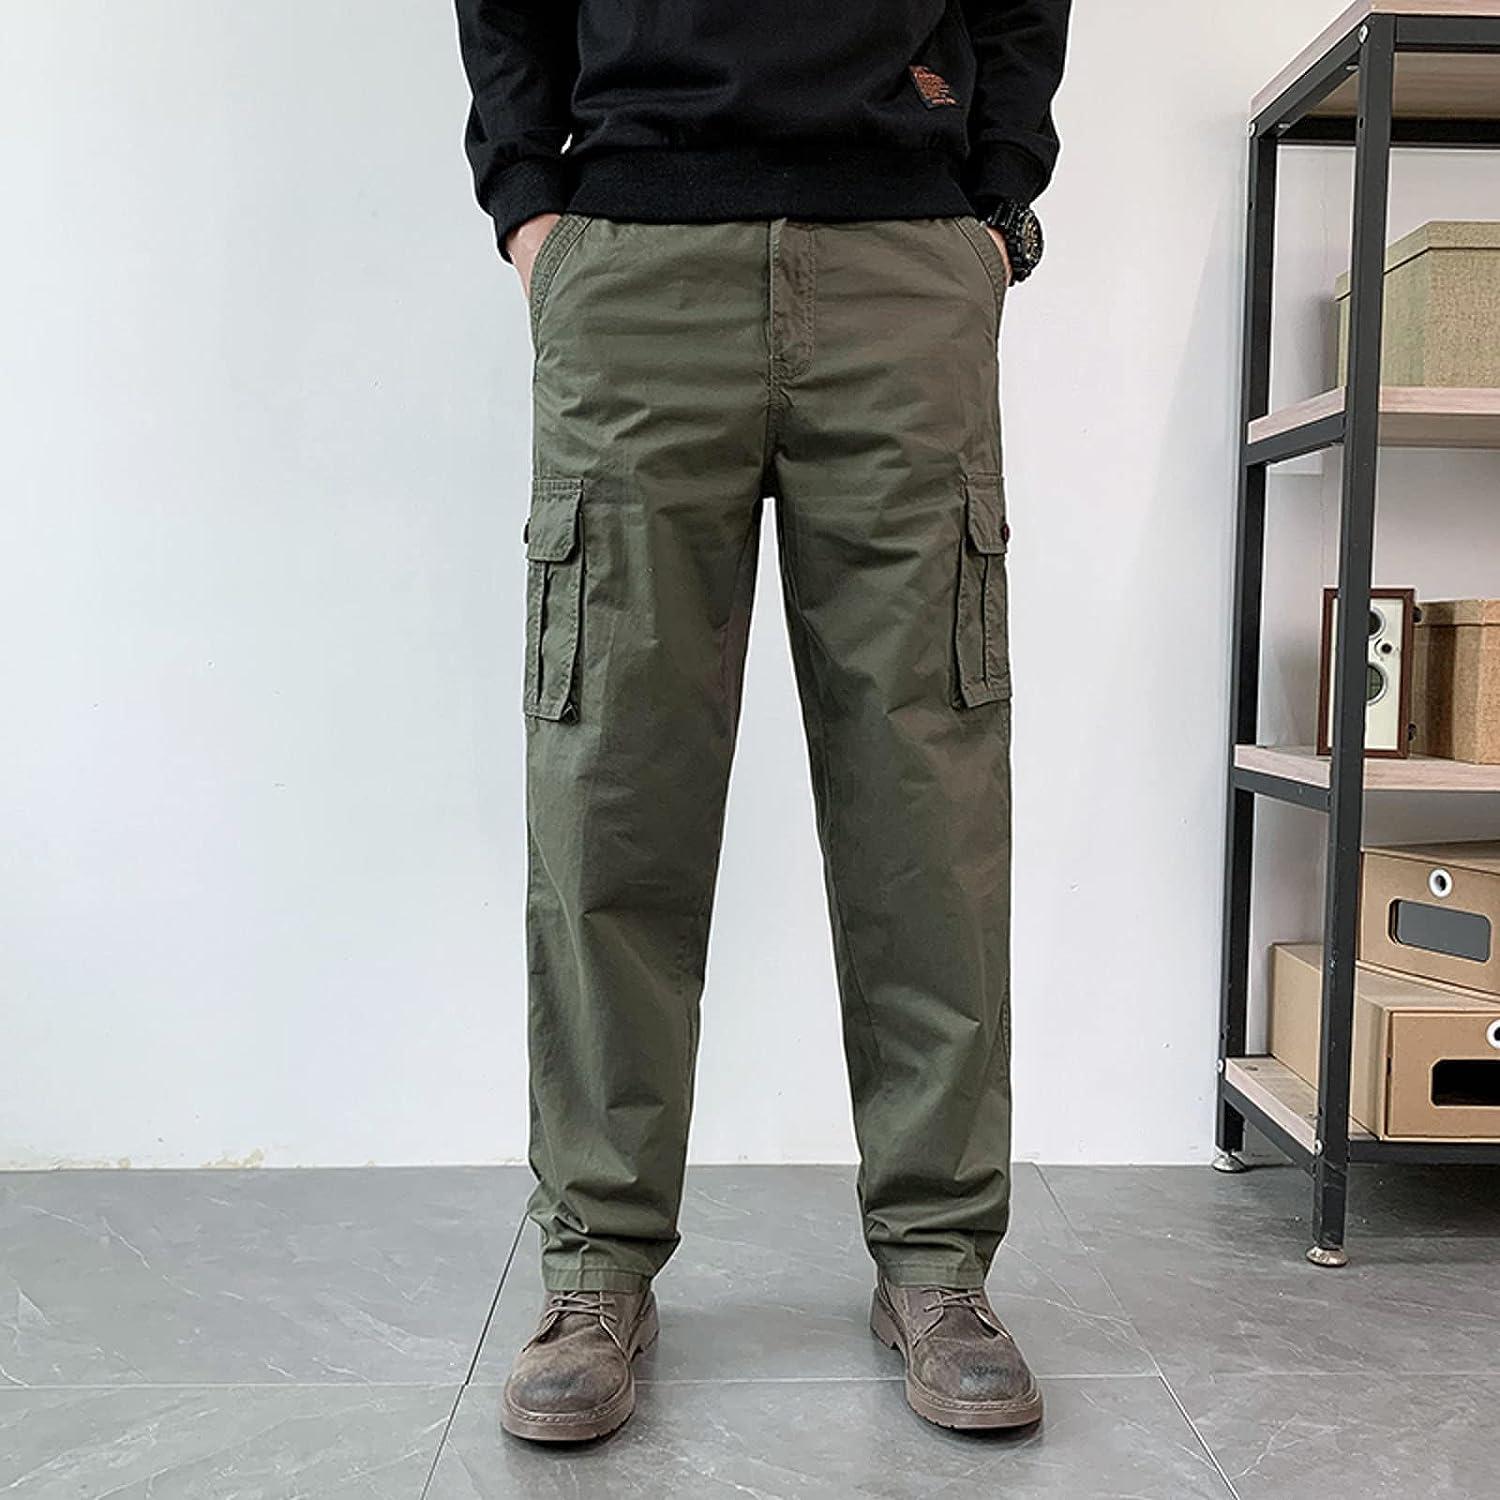 Pants for Men Modern Fit Athletic Fishing Long Pants Utility Short Workwear  Hiking Sweatpants C #2 X-Large